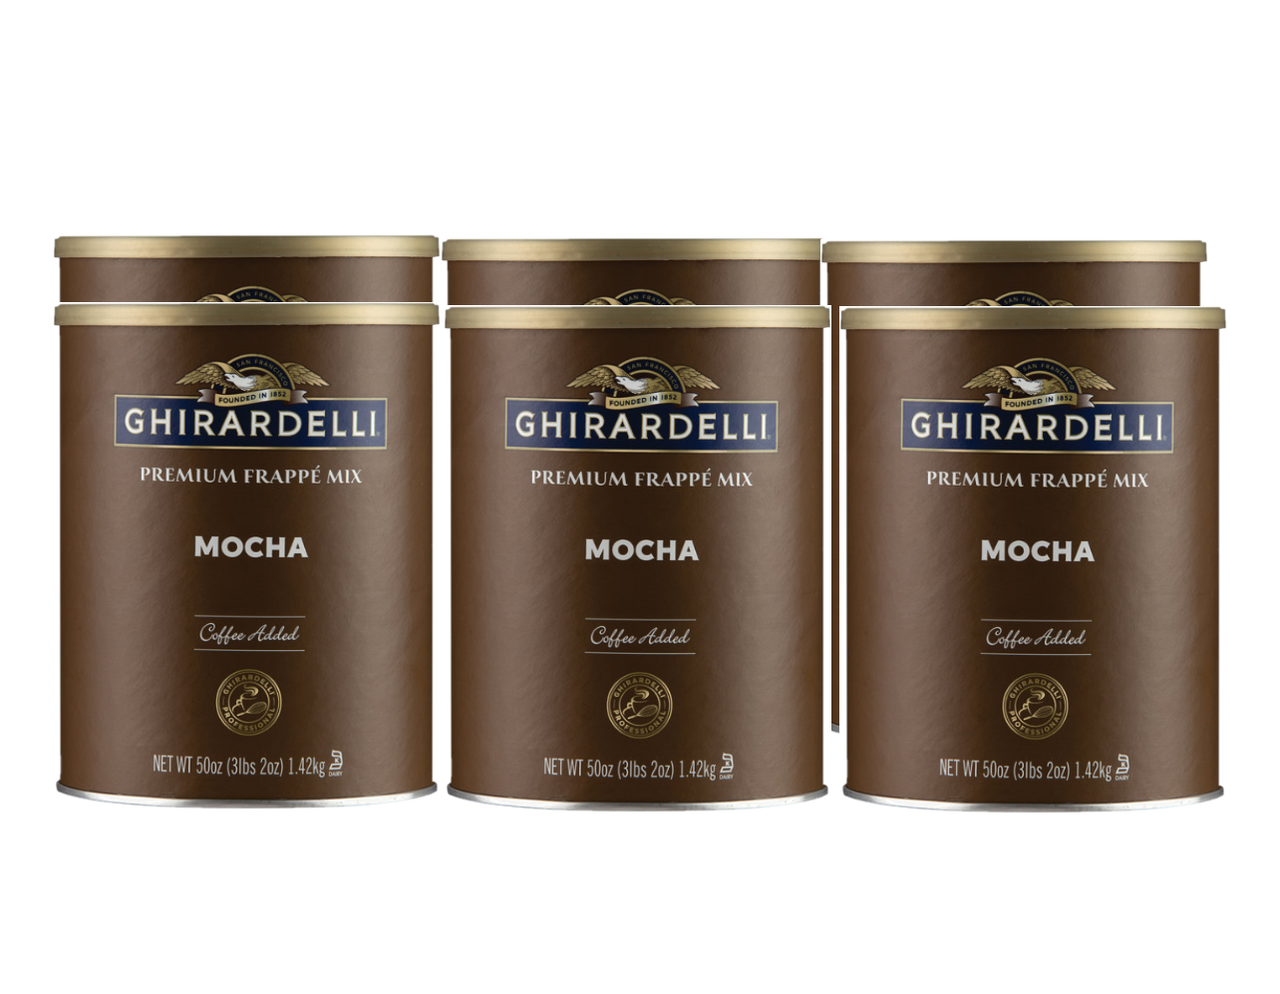 Ghirardelli 3.12 lb. Mocha Frappe Mix 6 Packs